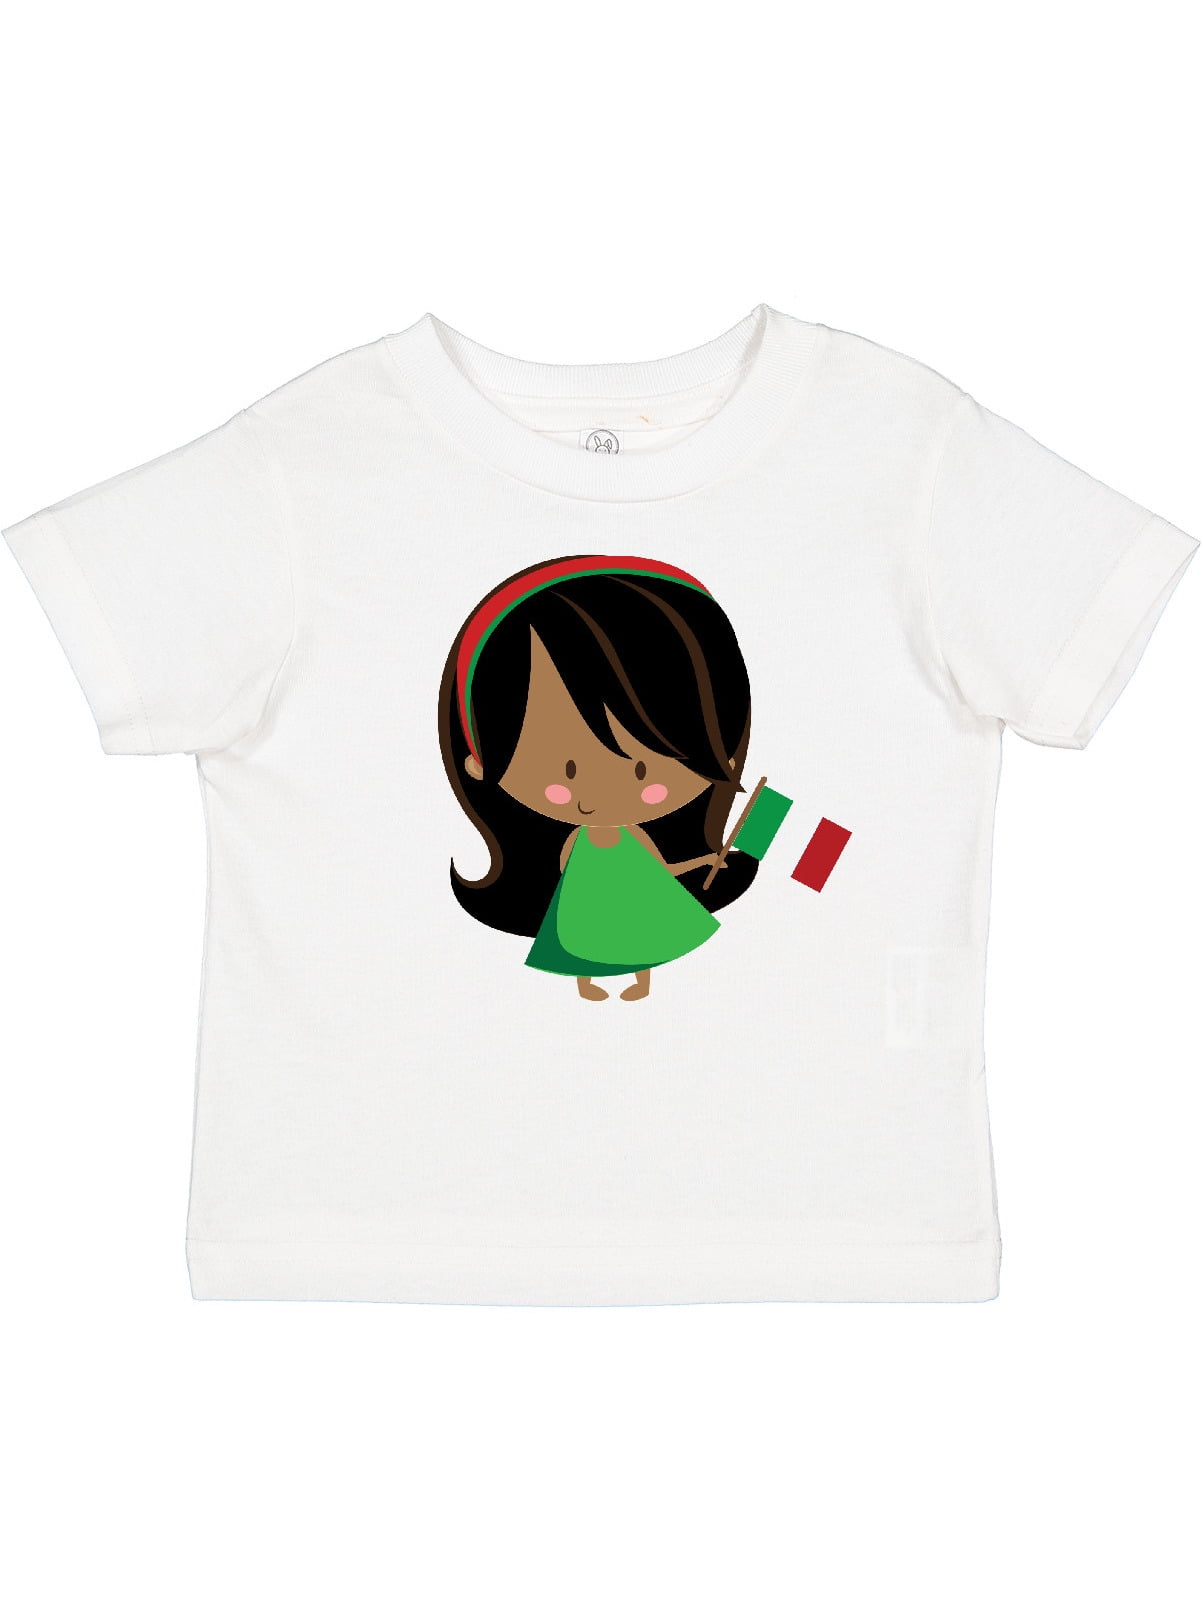 Short Sleeve Mexico Flag Dog Paw T-Shirts for Kids Kawaii Tunic Tops with Falbala 2-6T